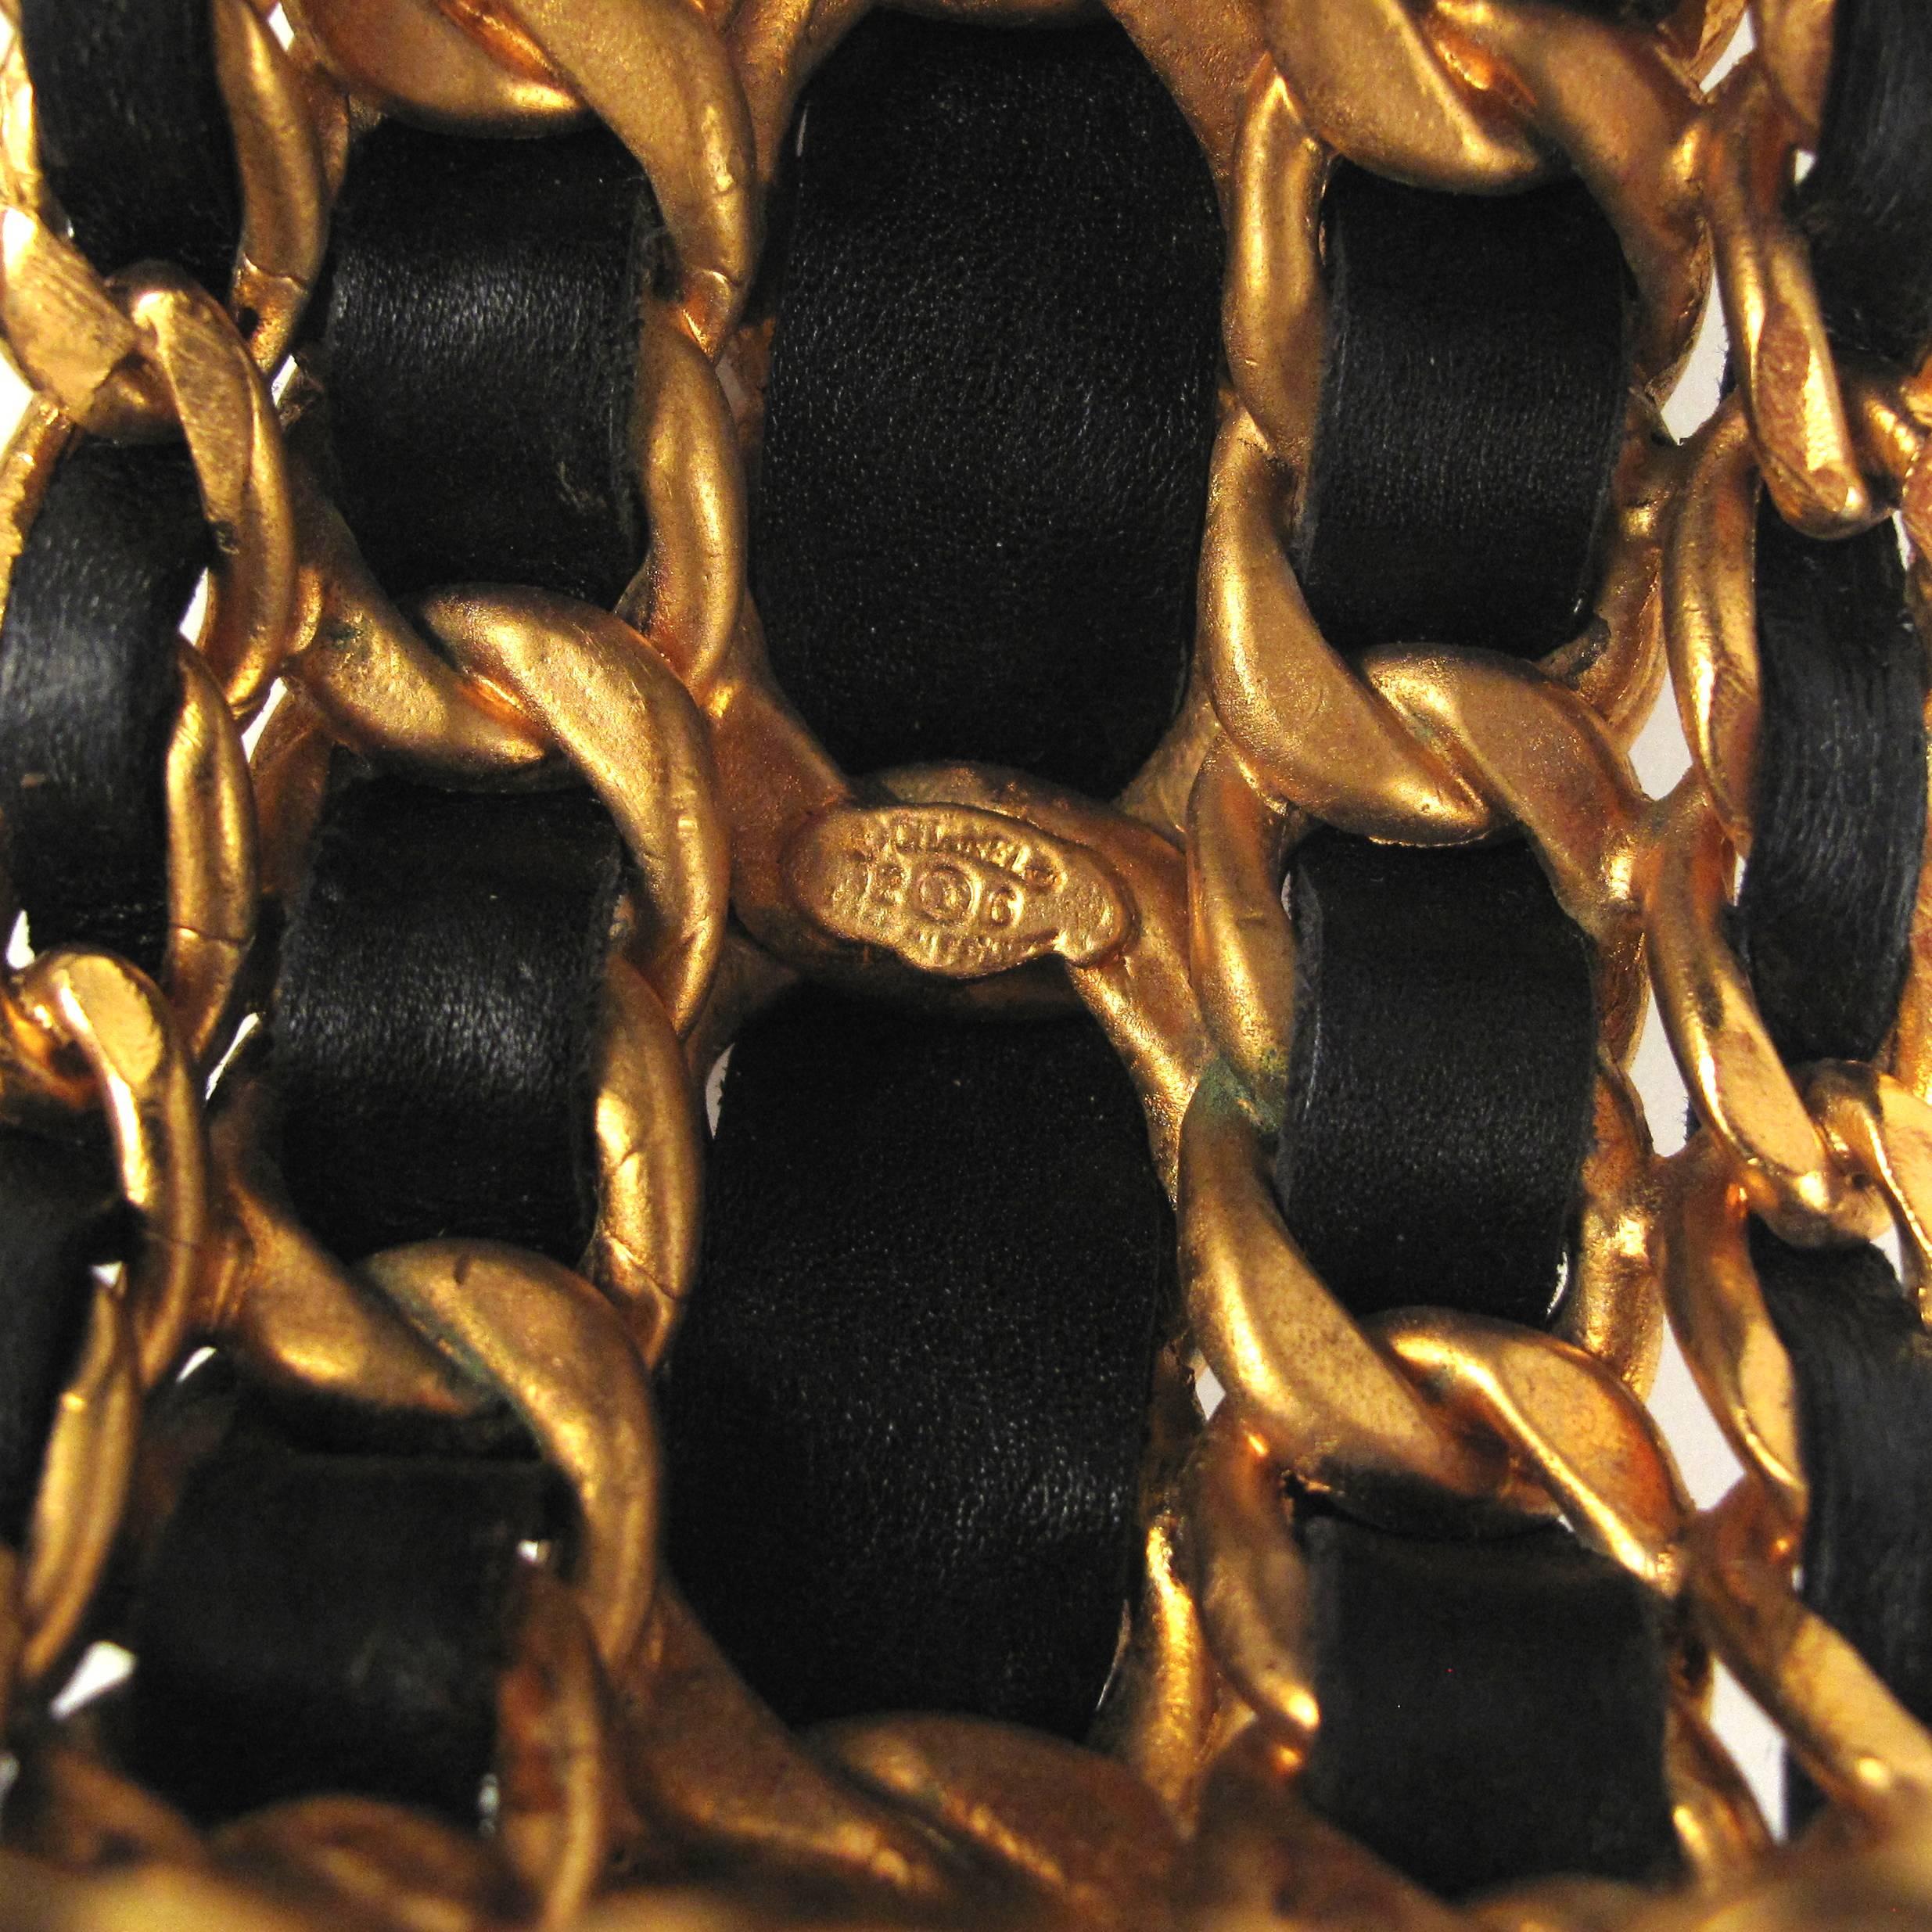 Chanel Cuff - XL Wide Chain Bracelet Vintage Black Gold Leather Bangle CC Charm 1